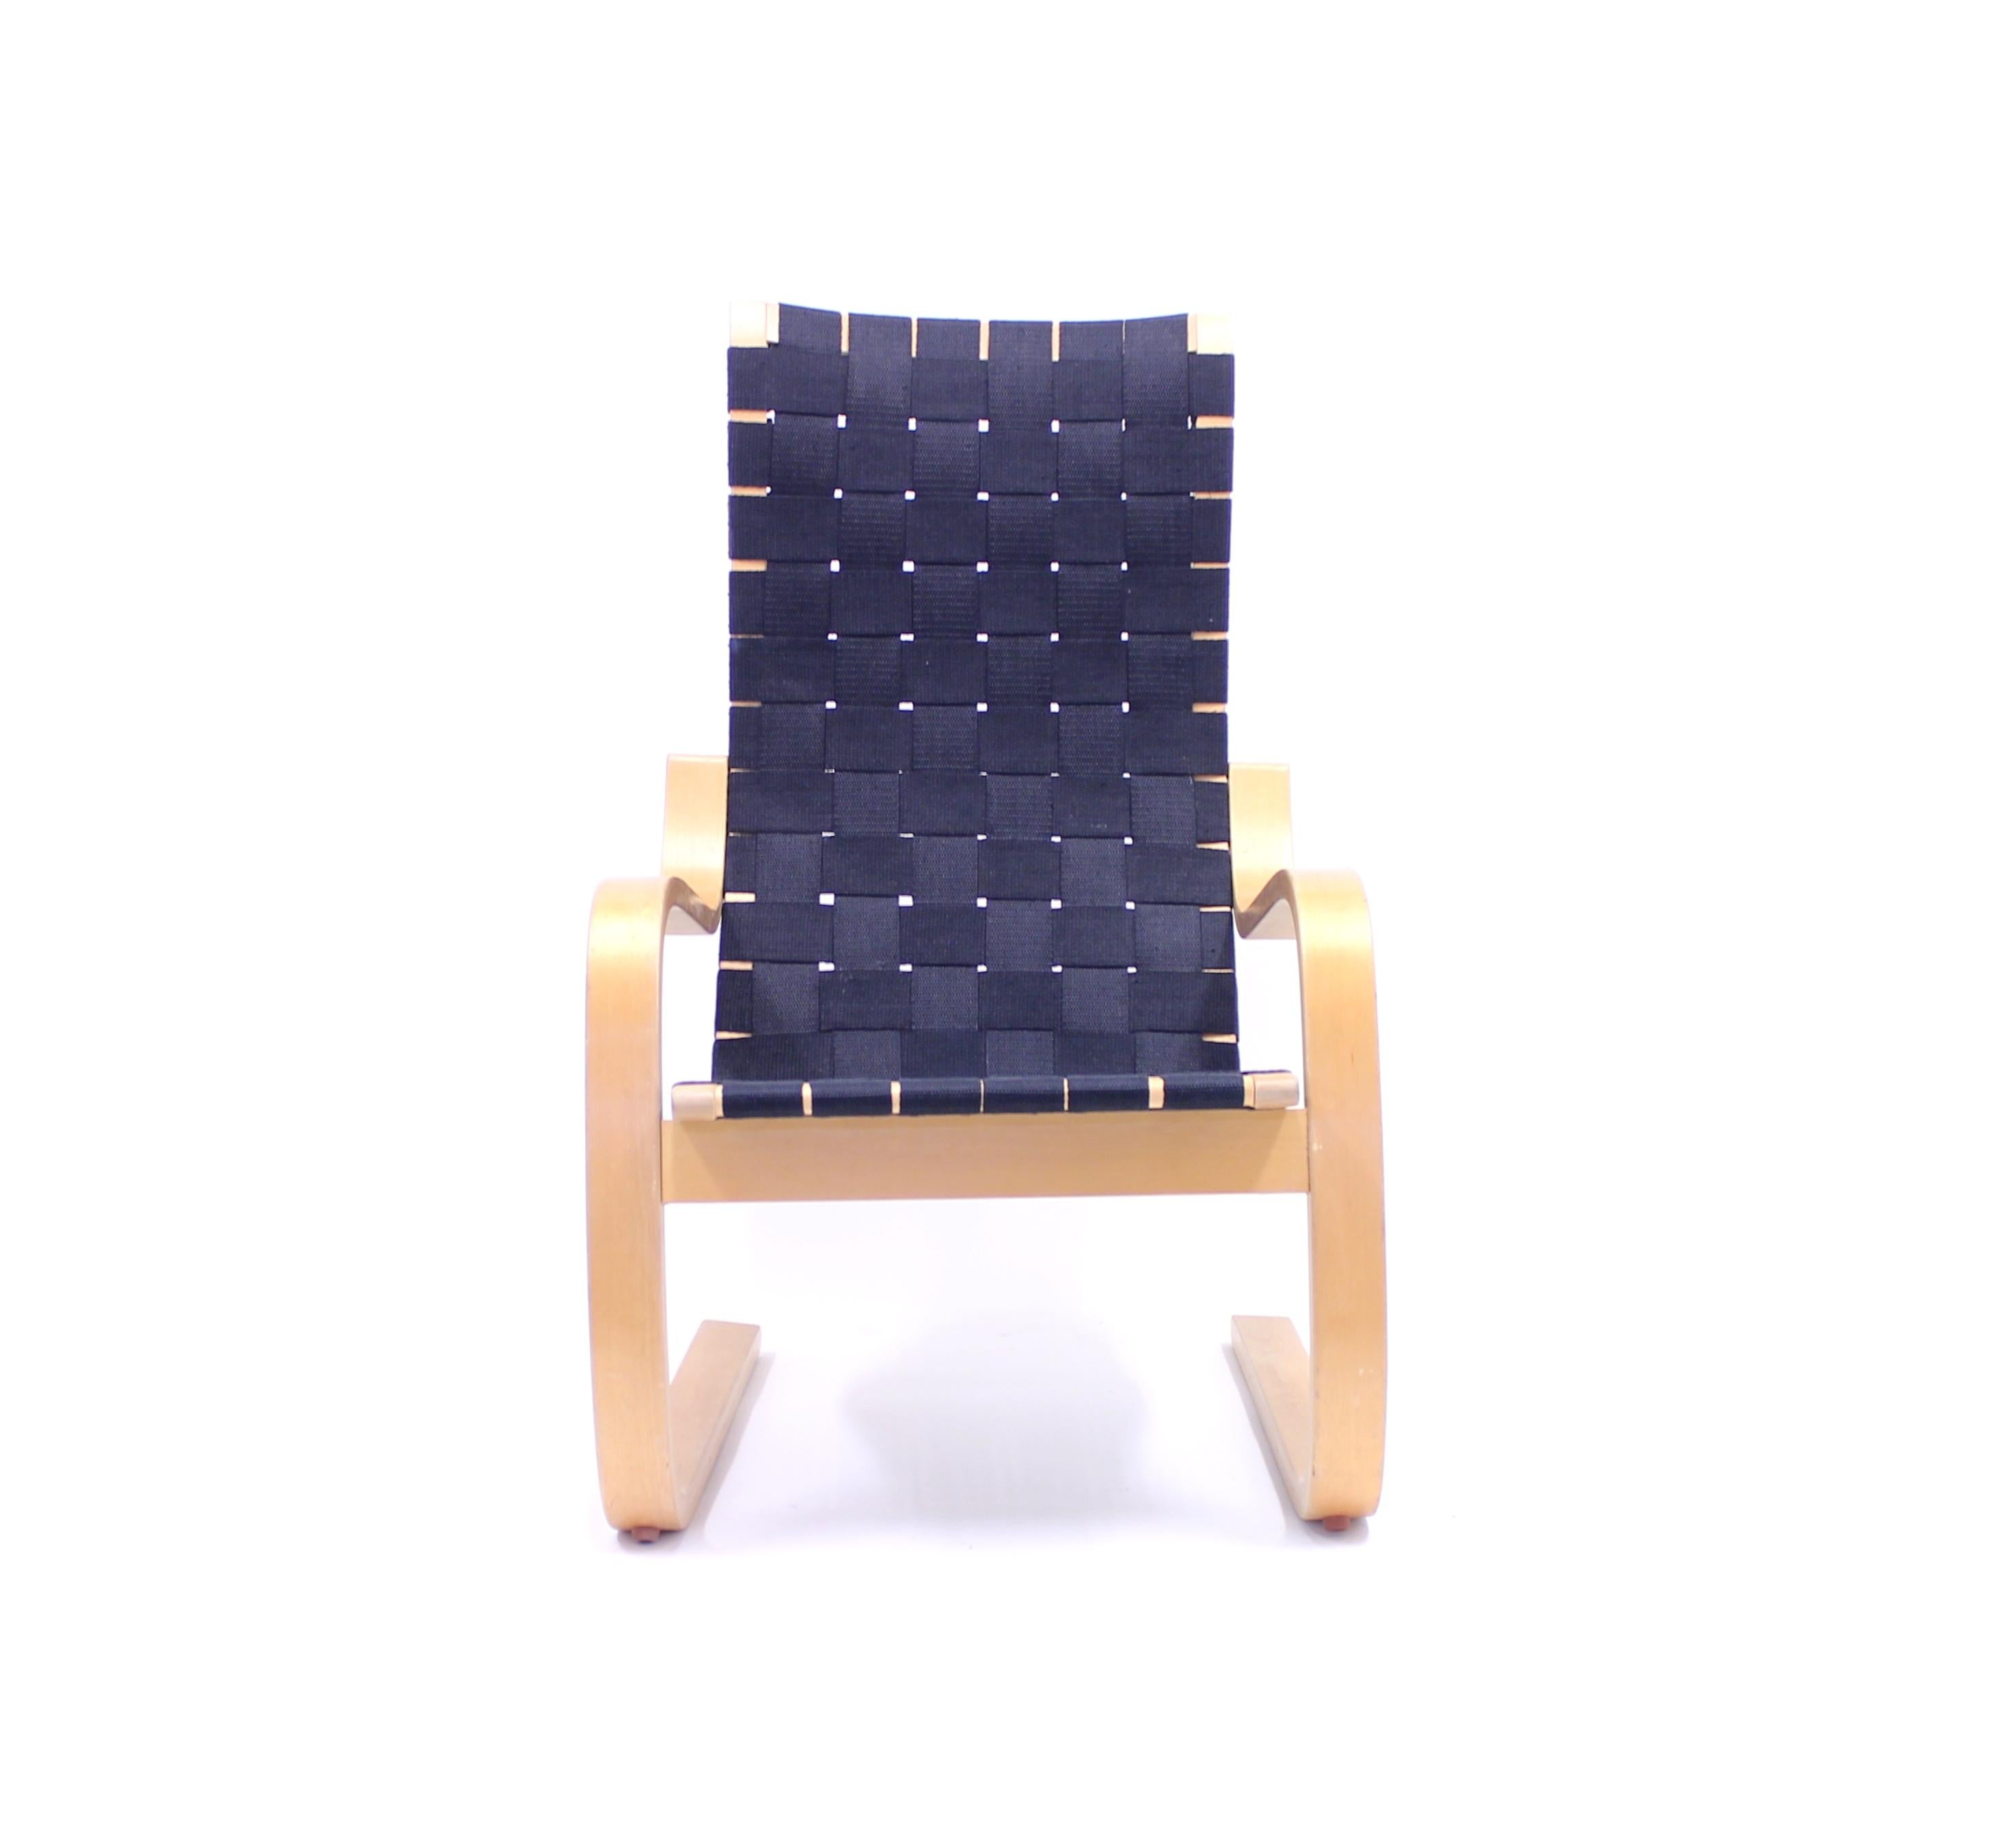 Hemp Alvar Aalto, Early Lounge Chair Model 406, Artek, Hedemora